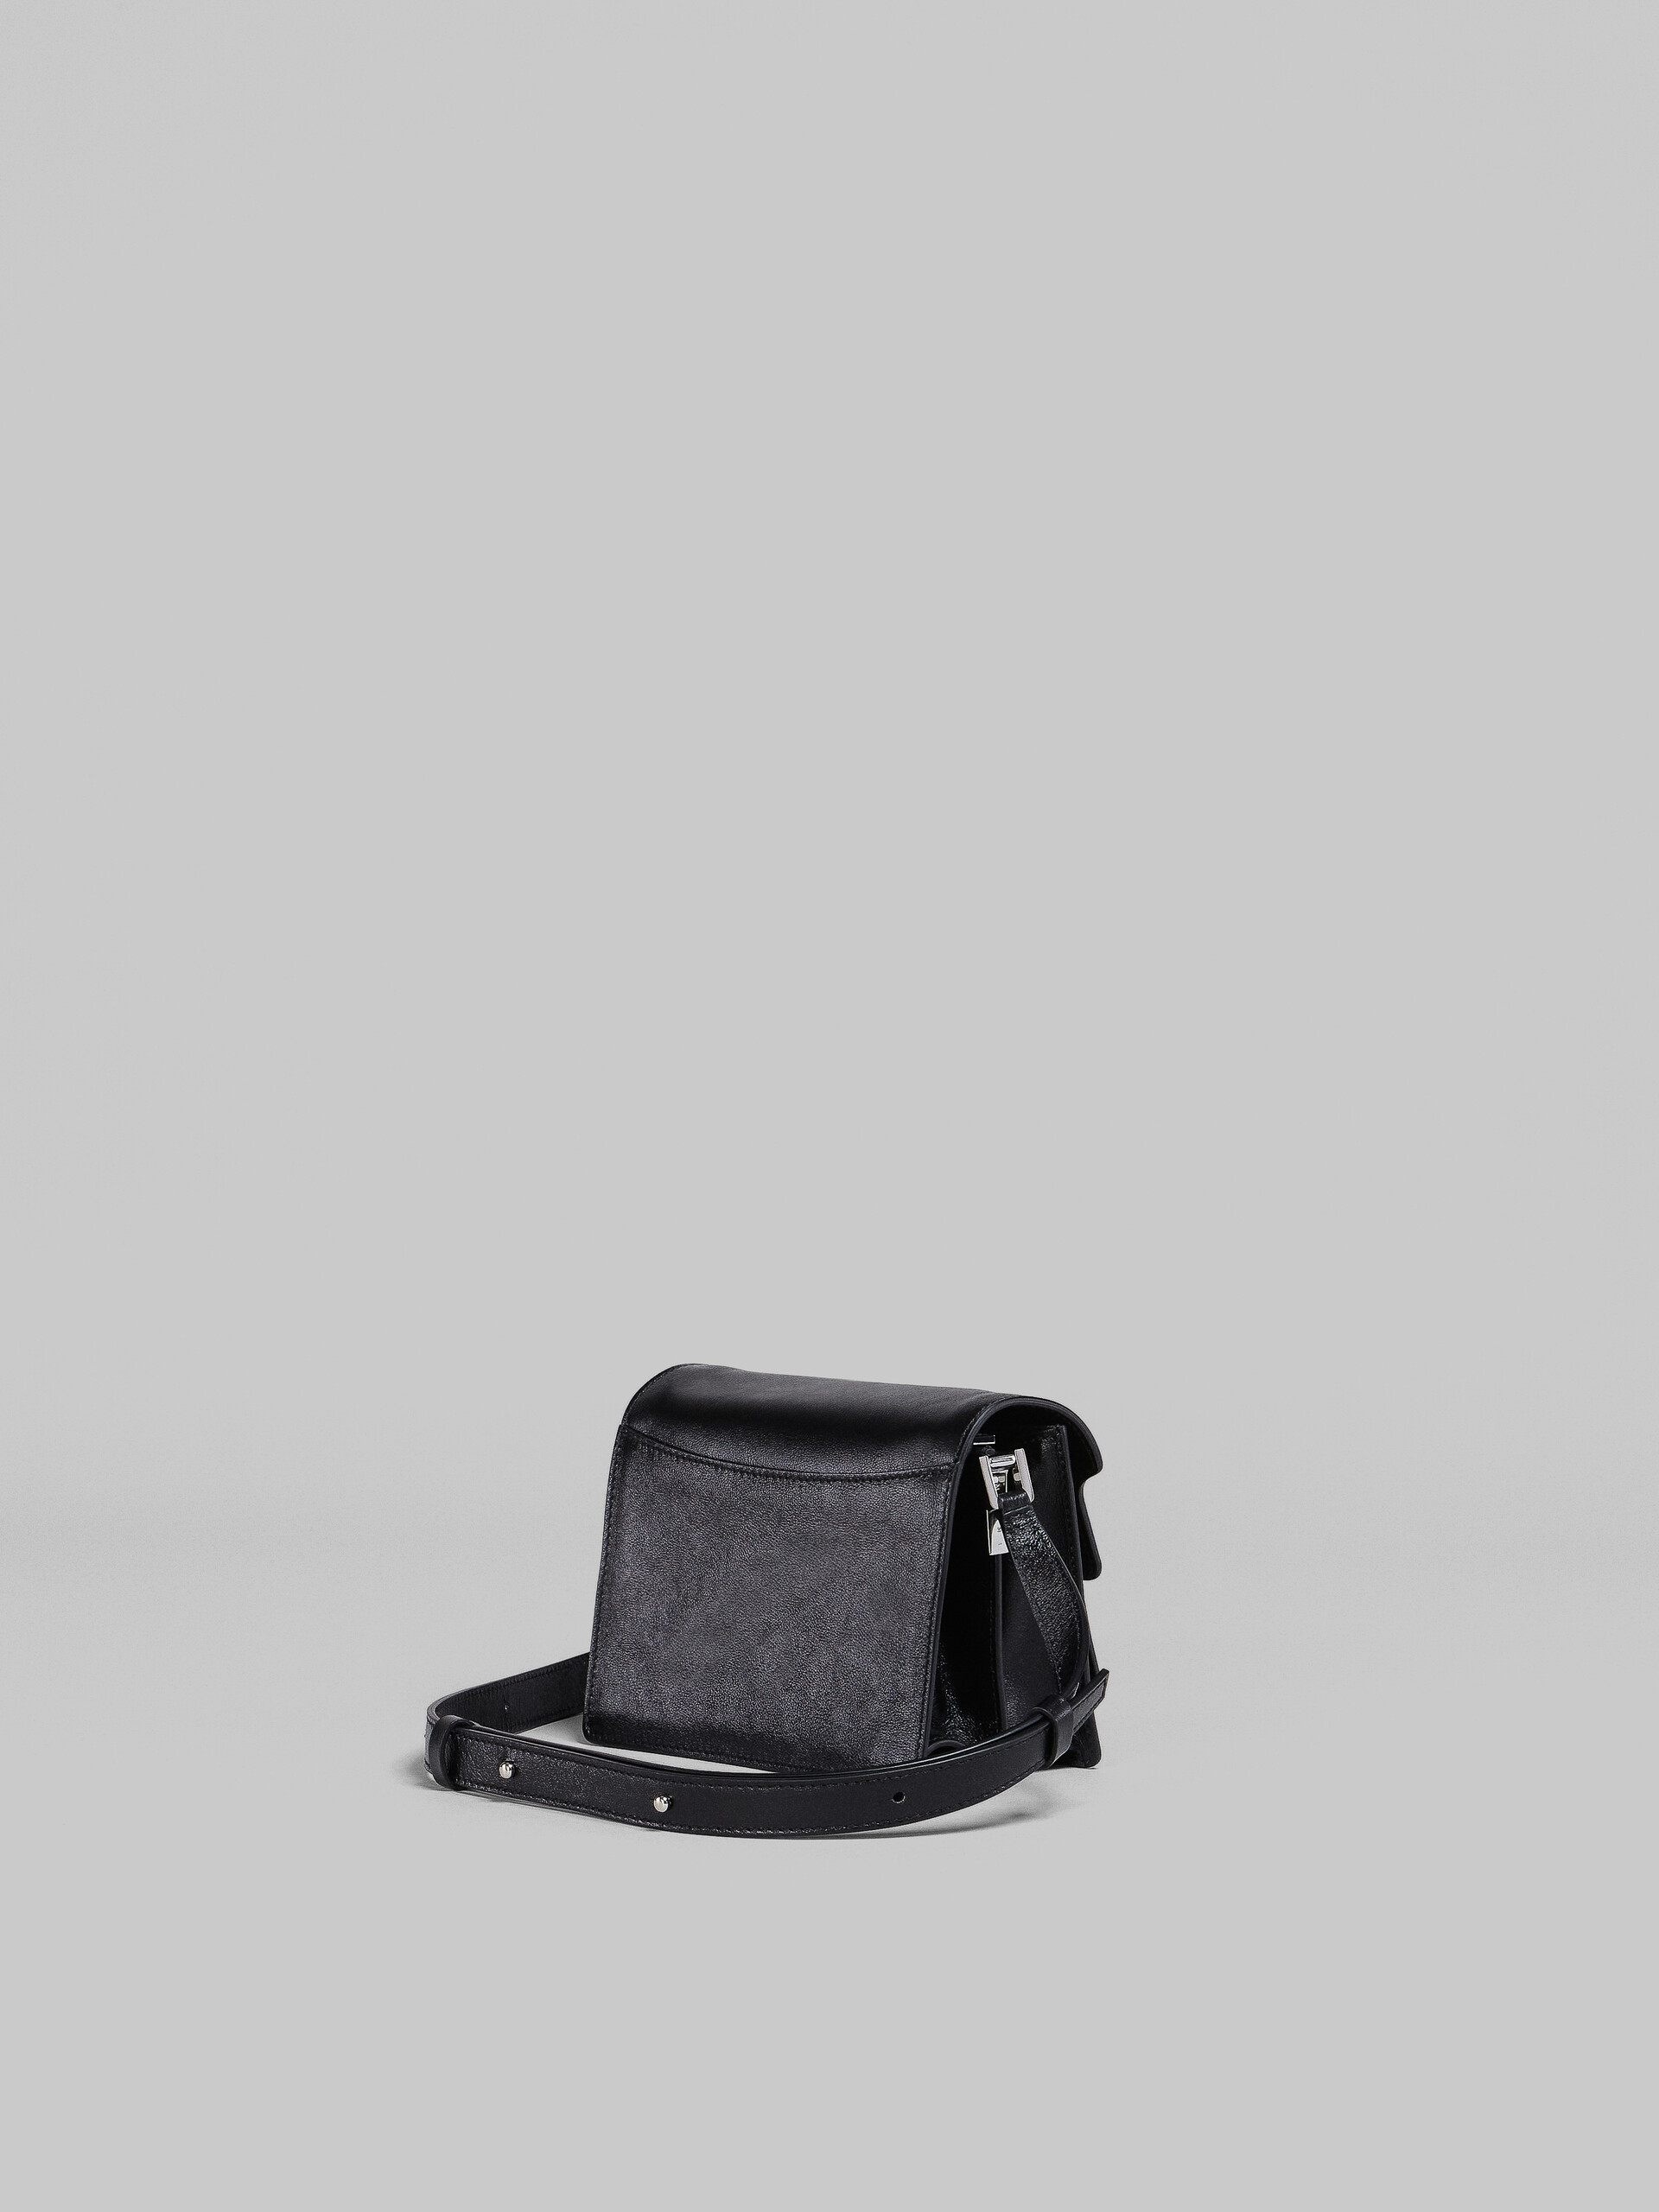 TRUNK SOFT mini bag in black leather